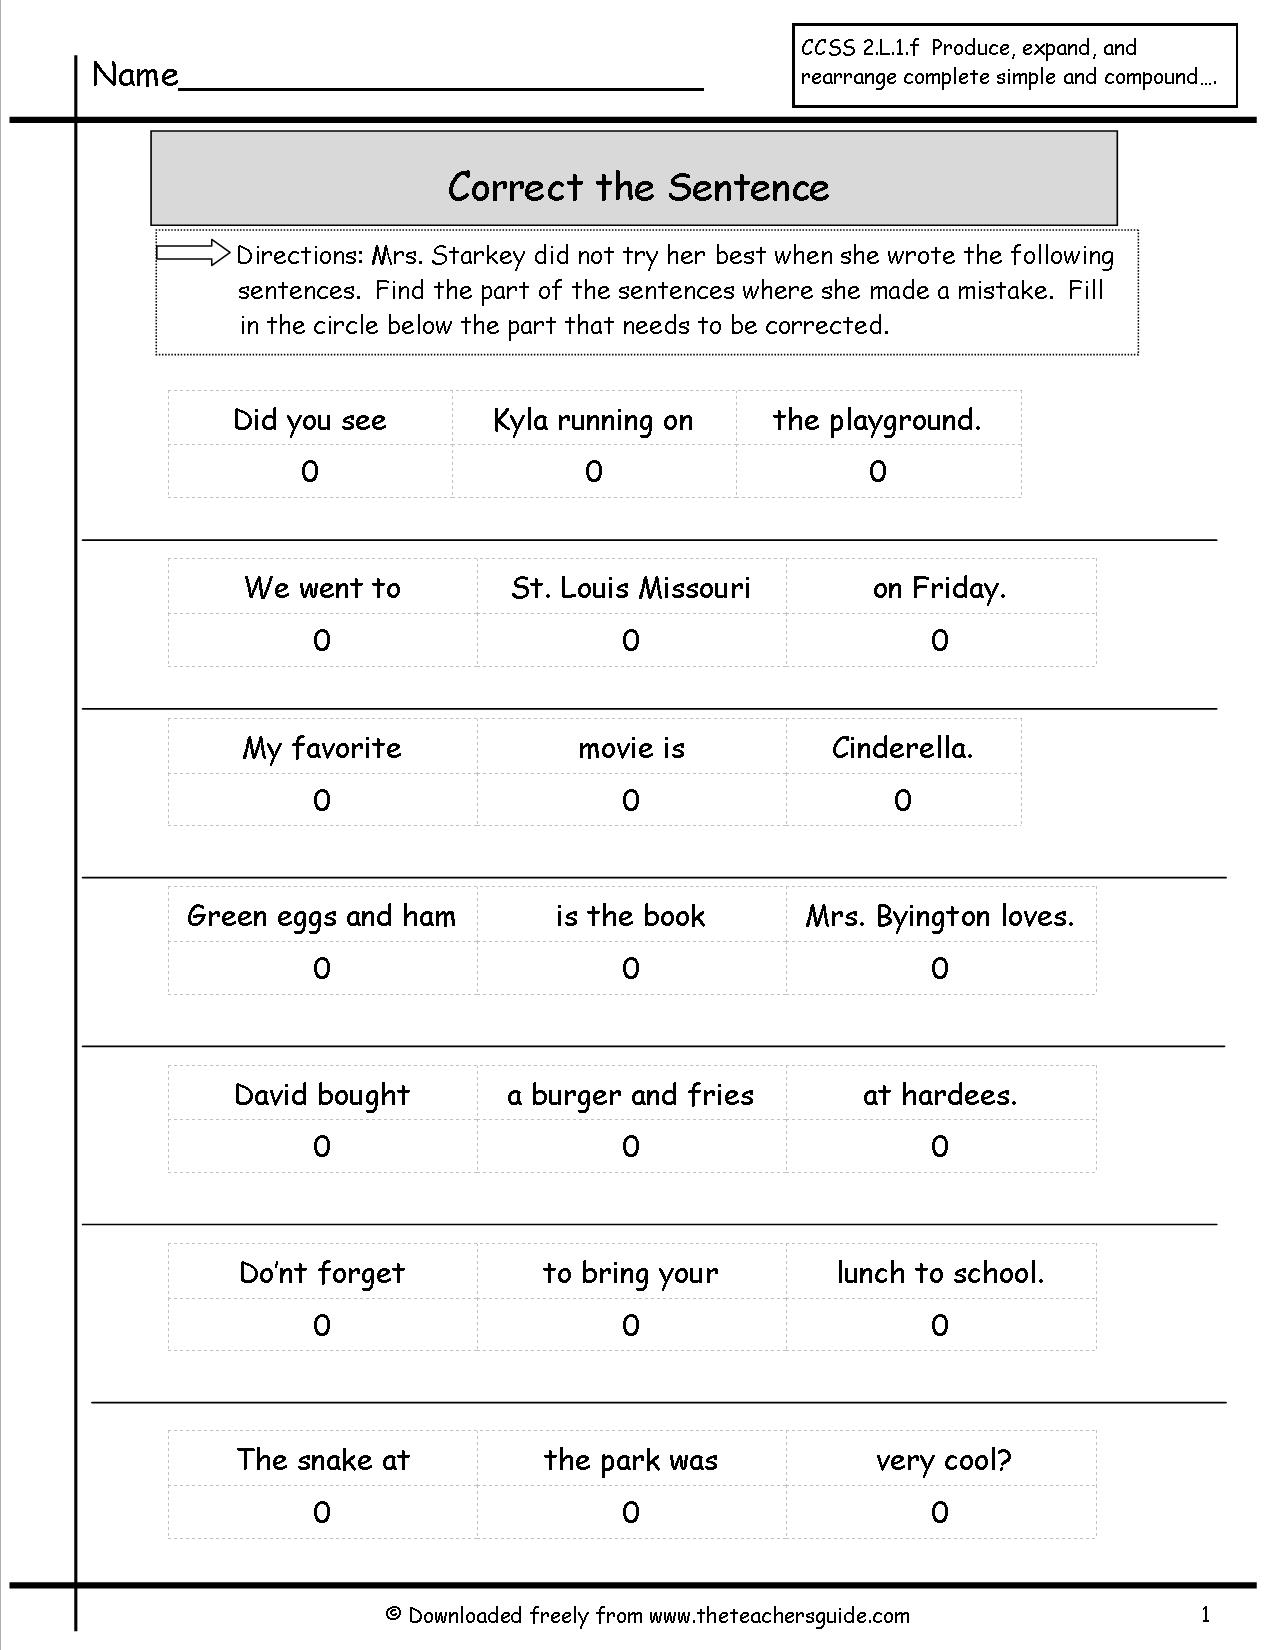 Correct Sentences Worksheet Image